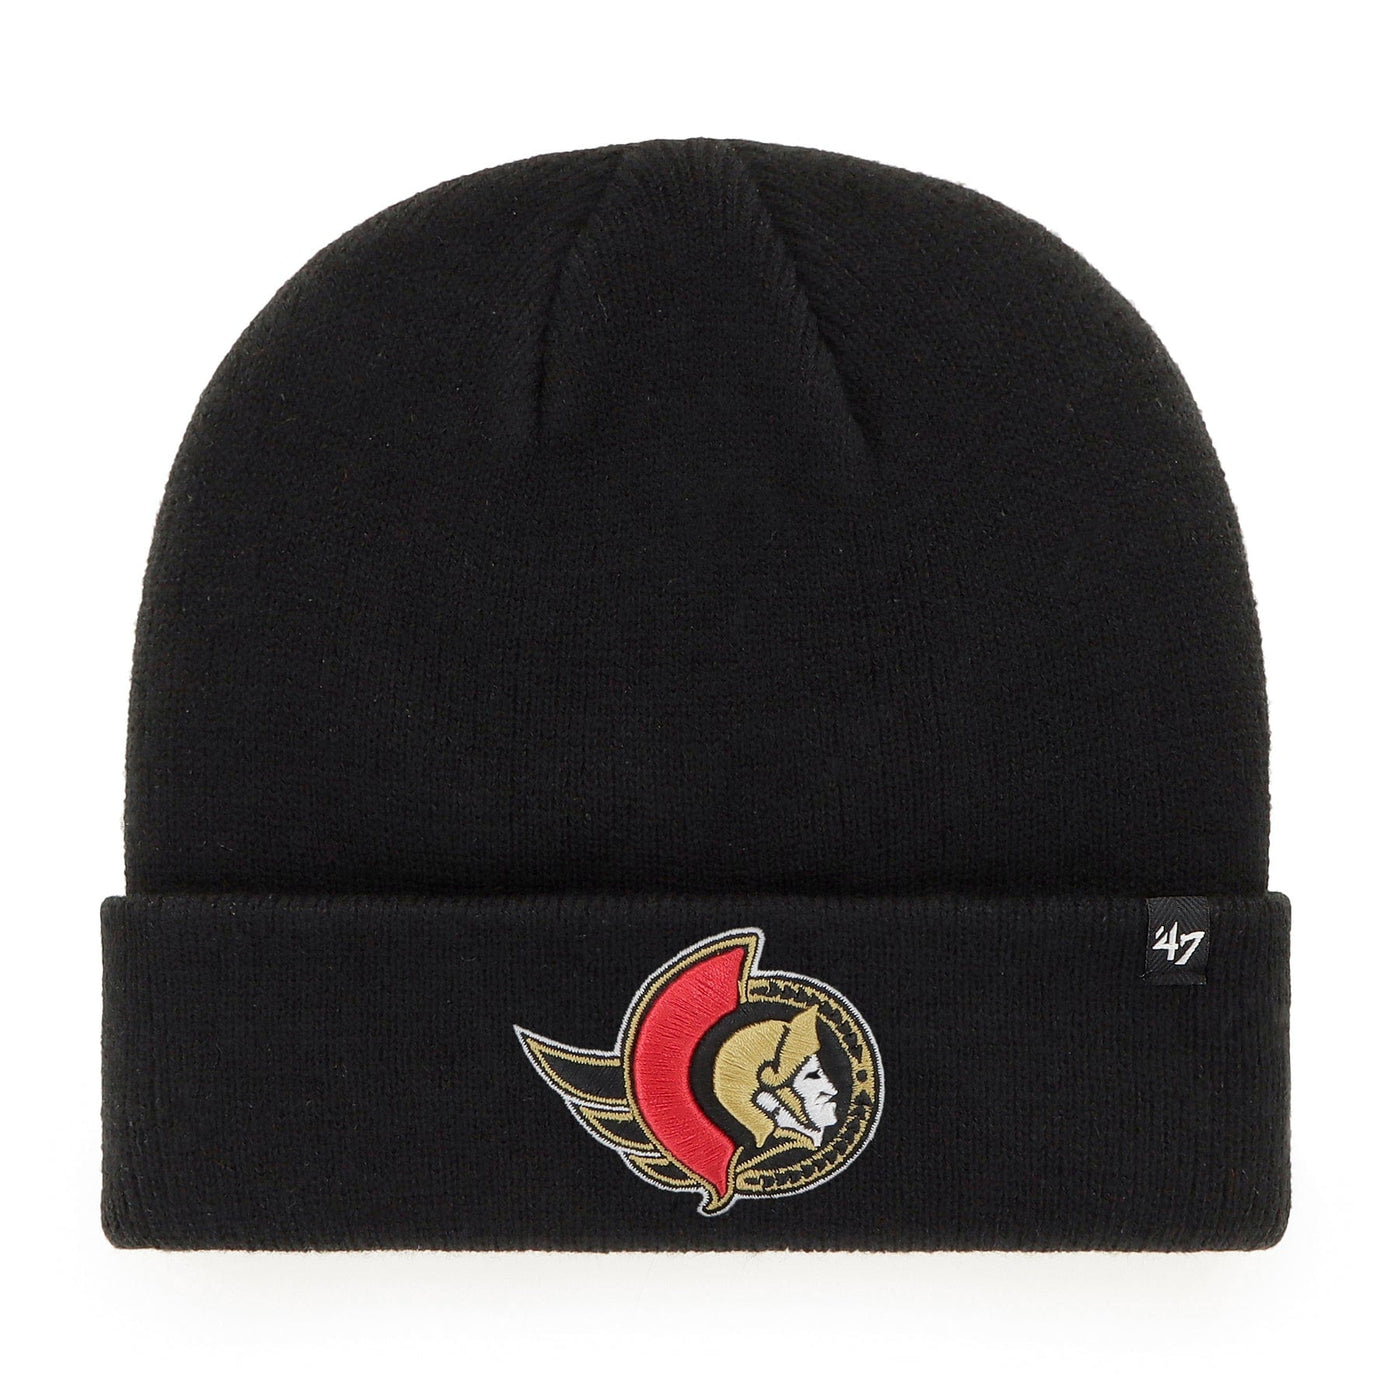 47 Brand NHL Raised Cuff Knit Toque - Ottawa Senators - TheHockeyShop.com